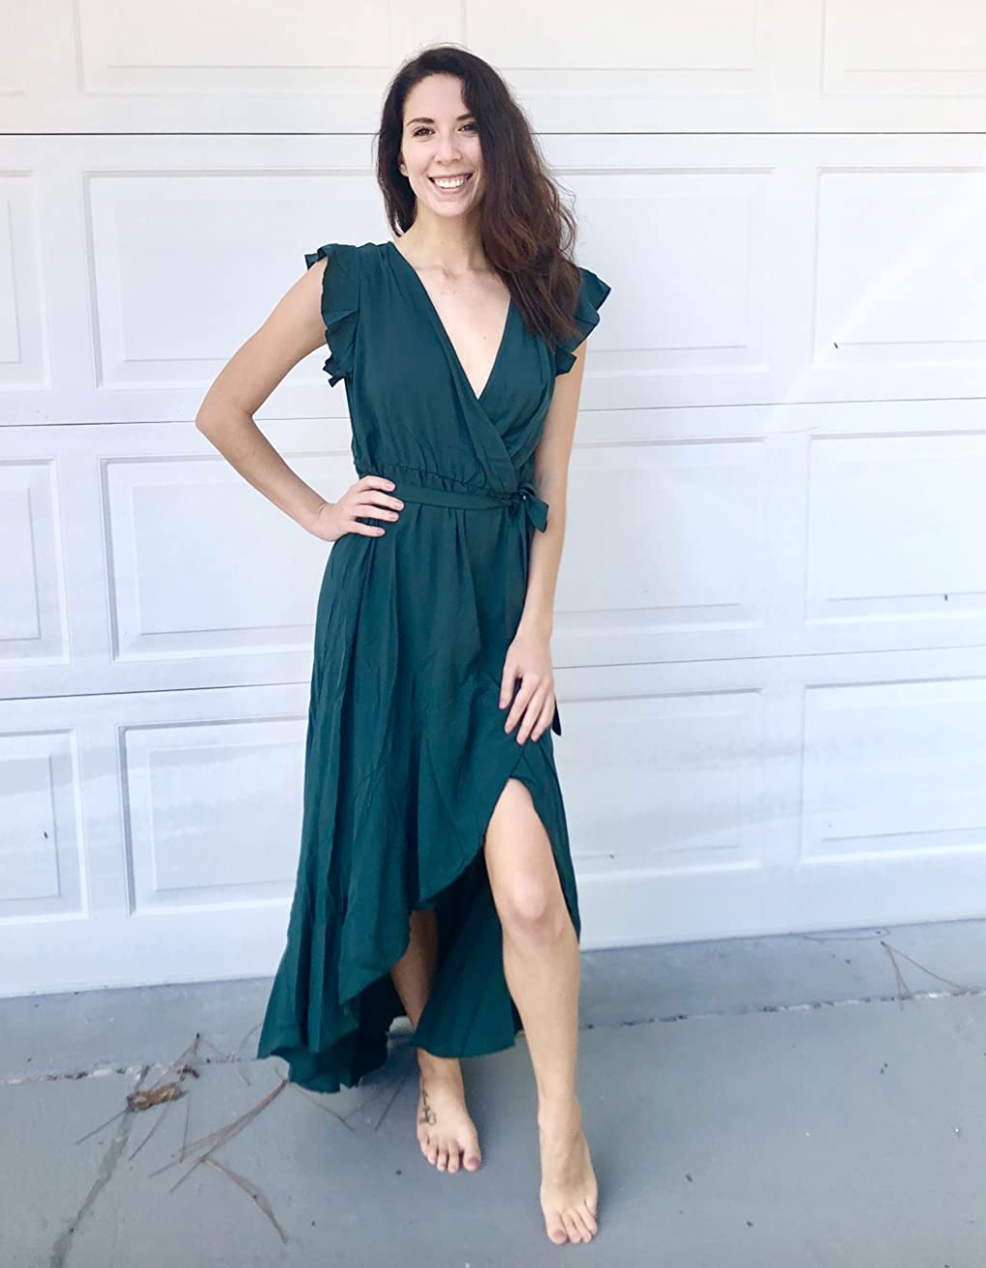 reviewer wearing the green dress